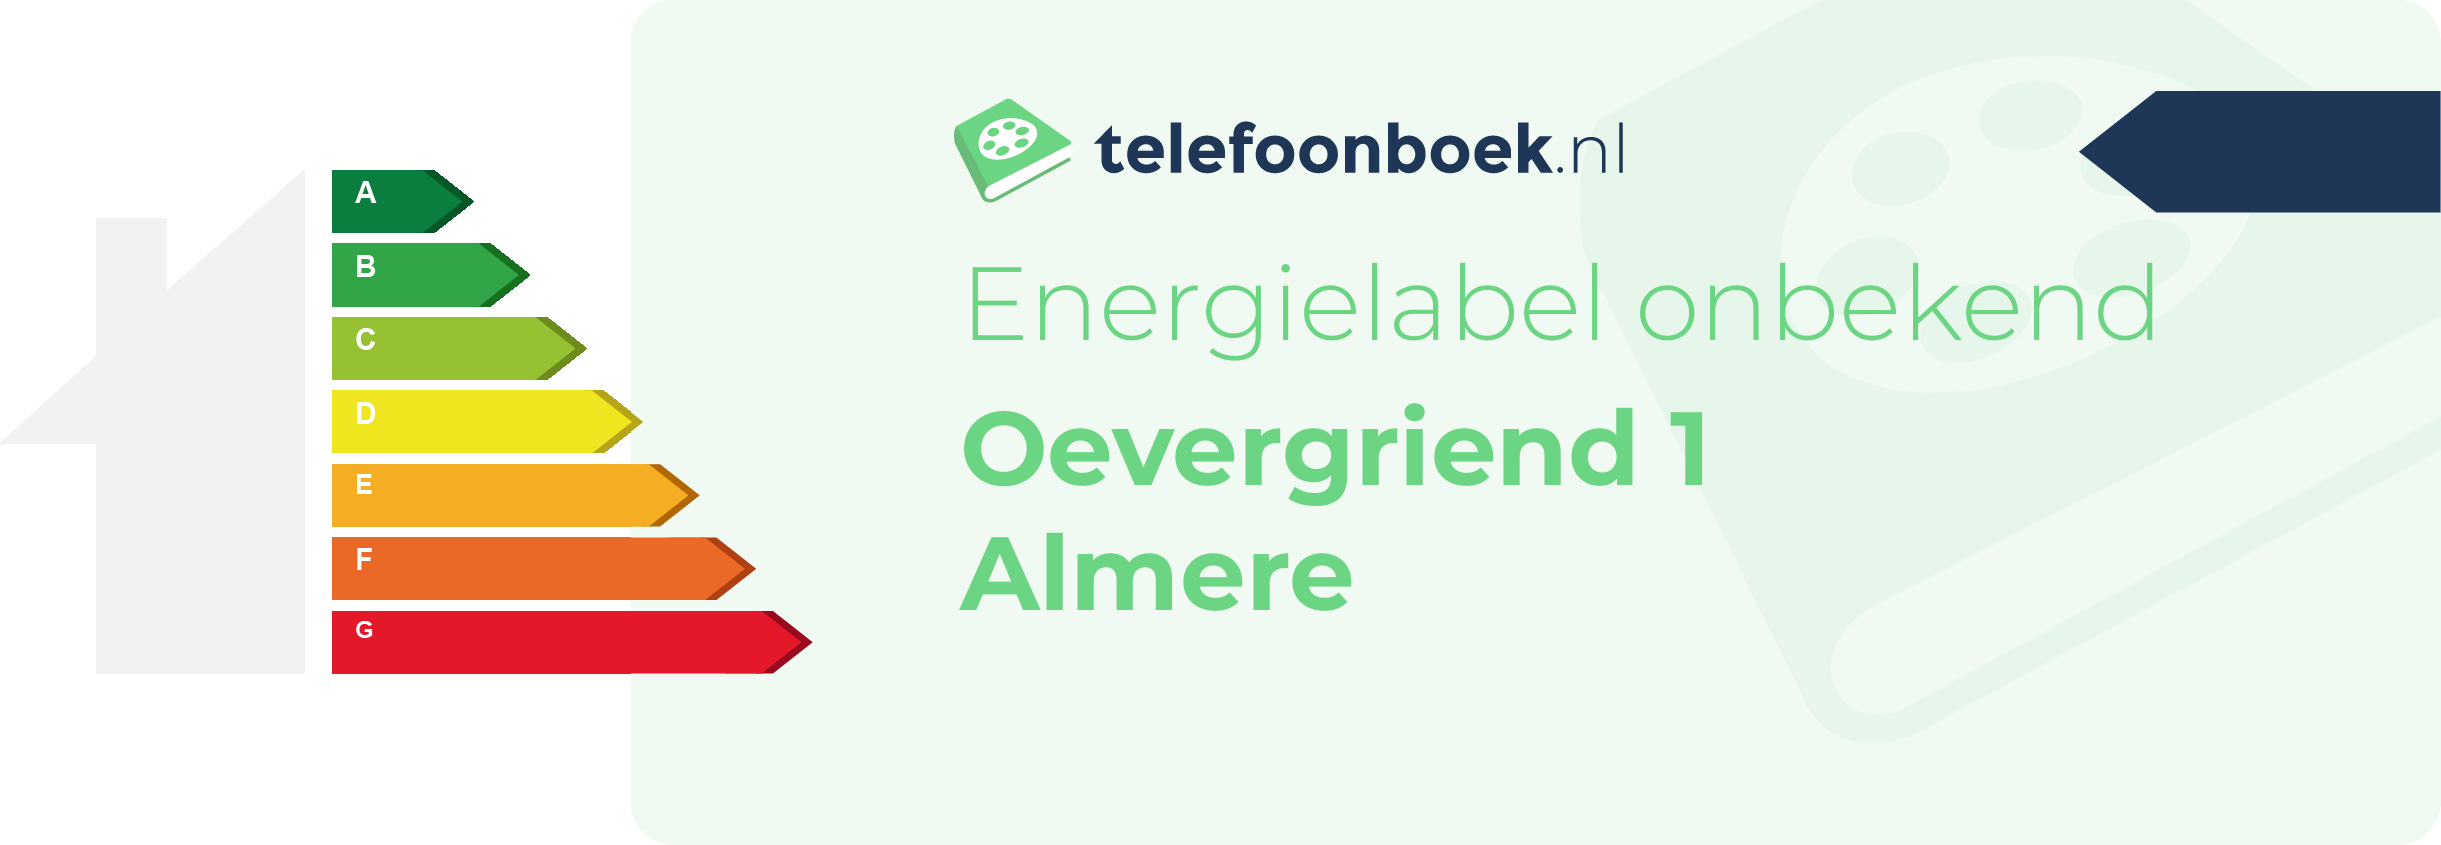 Energielabel Oevergriend 1 Almere